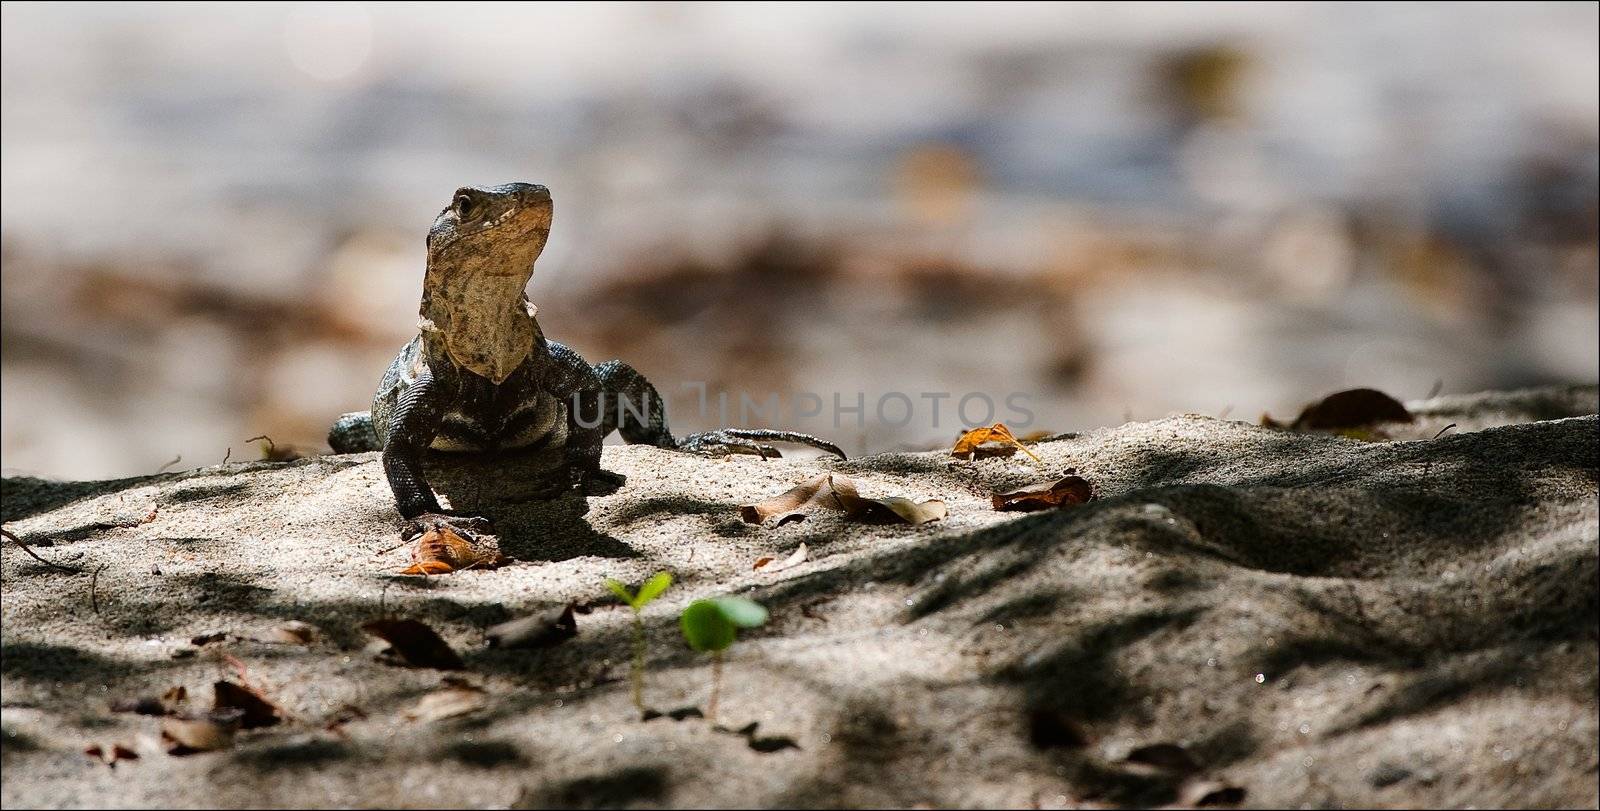 Lizard on sand. by SURZ